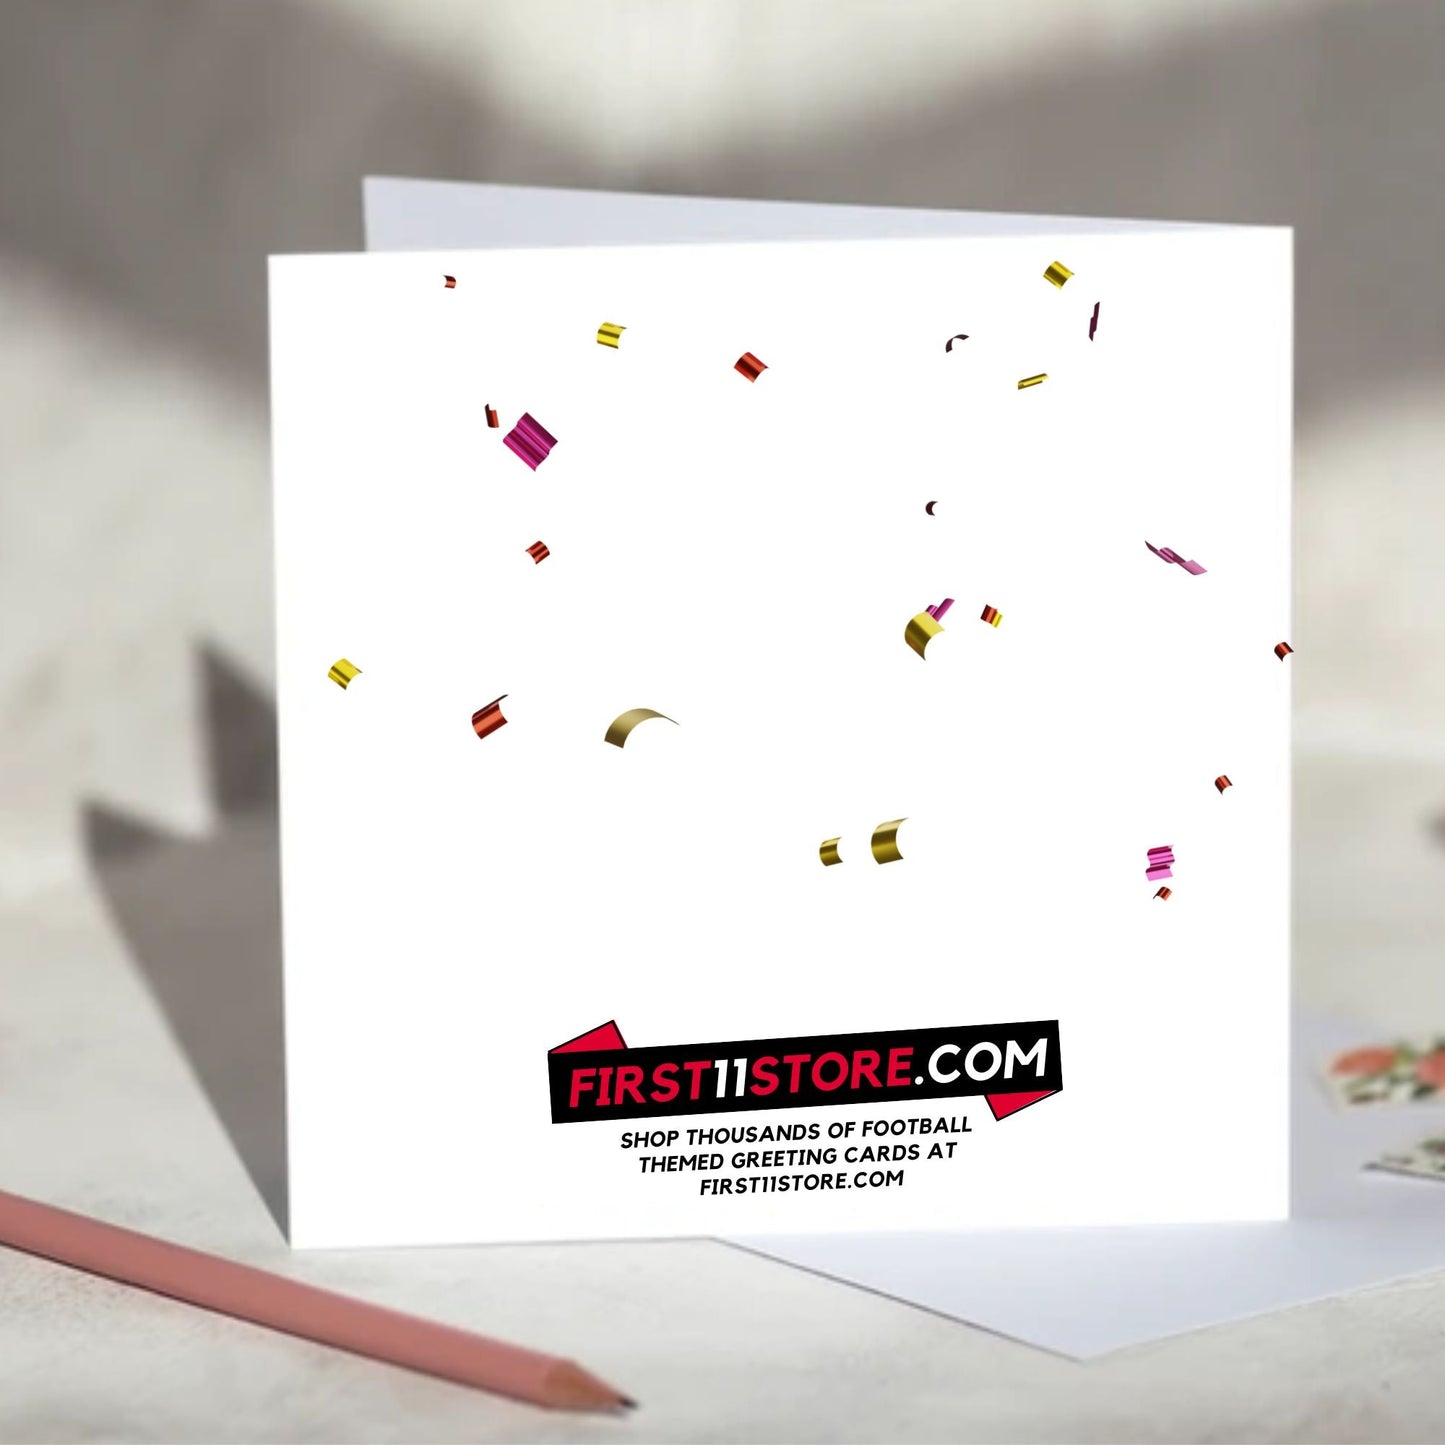 Kieran Trippier Trip Into Bed Greeting Card - Valentine's Day, Birthday, Anniversary Card